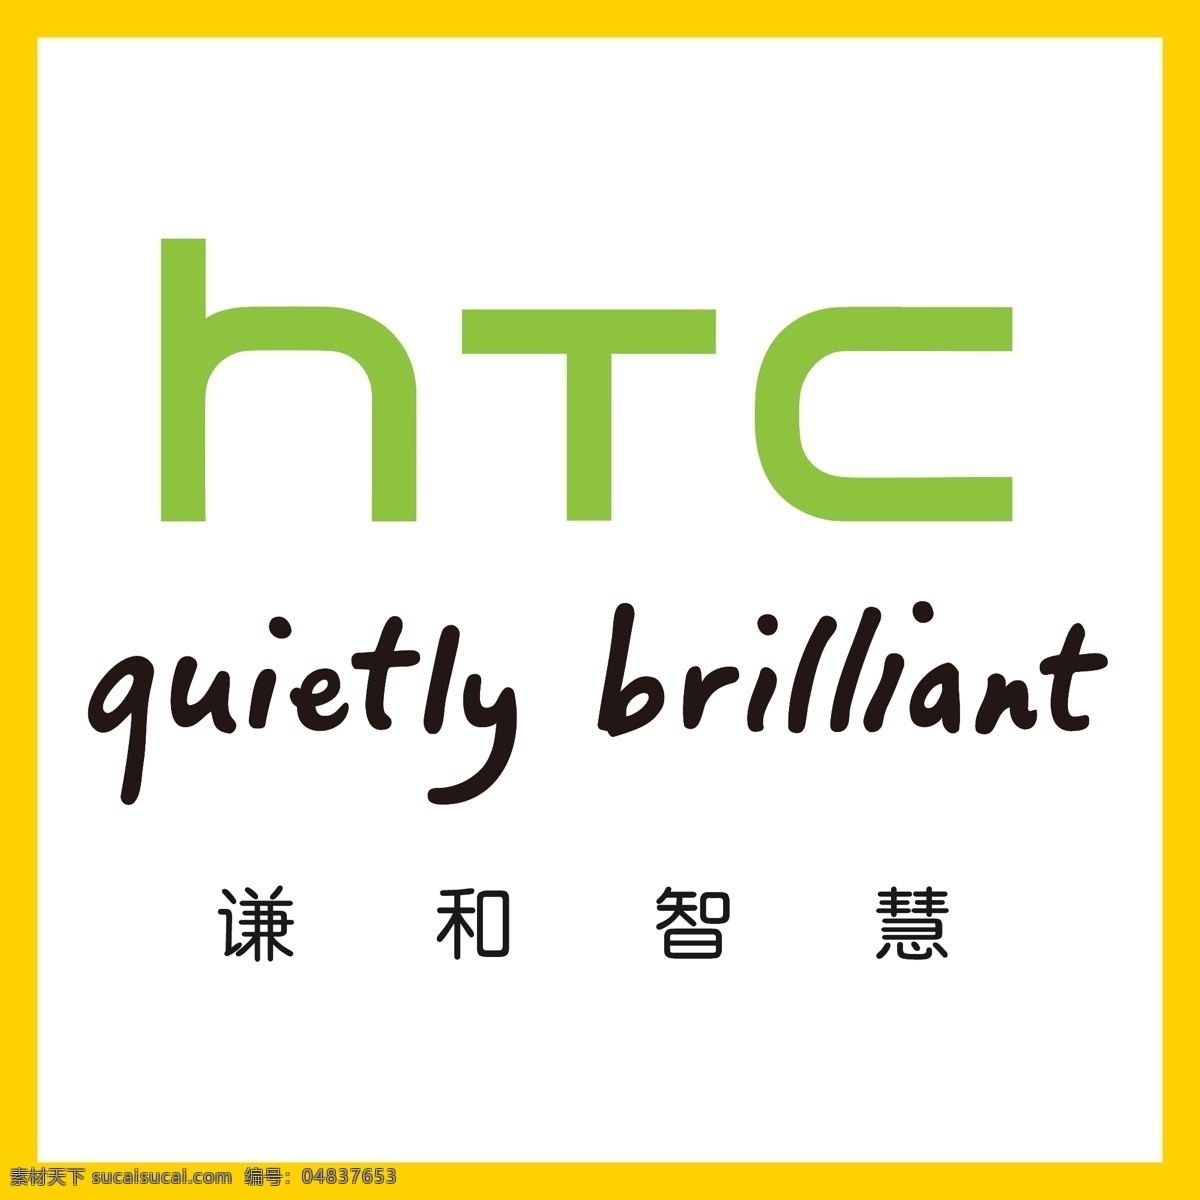 htc手机 台湾 智能手机 安卓系统 笔记本 电脑 苹果 nfc 全屏幕 全网通 八核 大屏幕 触屏 骁龙处理器 蔡司镜头 指纹识别 logo 标志 矢量 vi logo设计